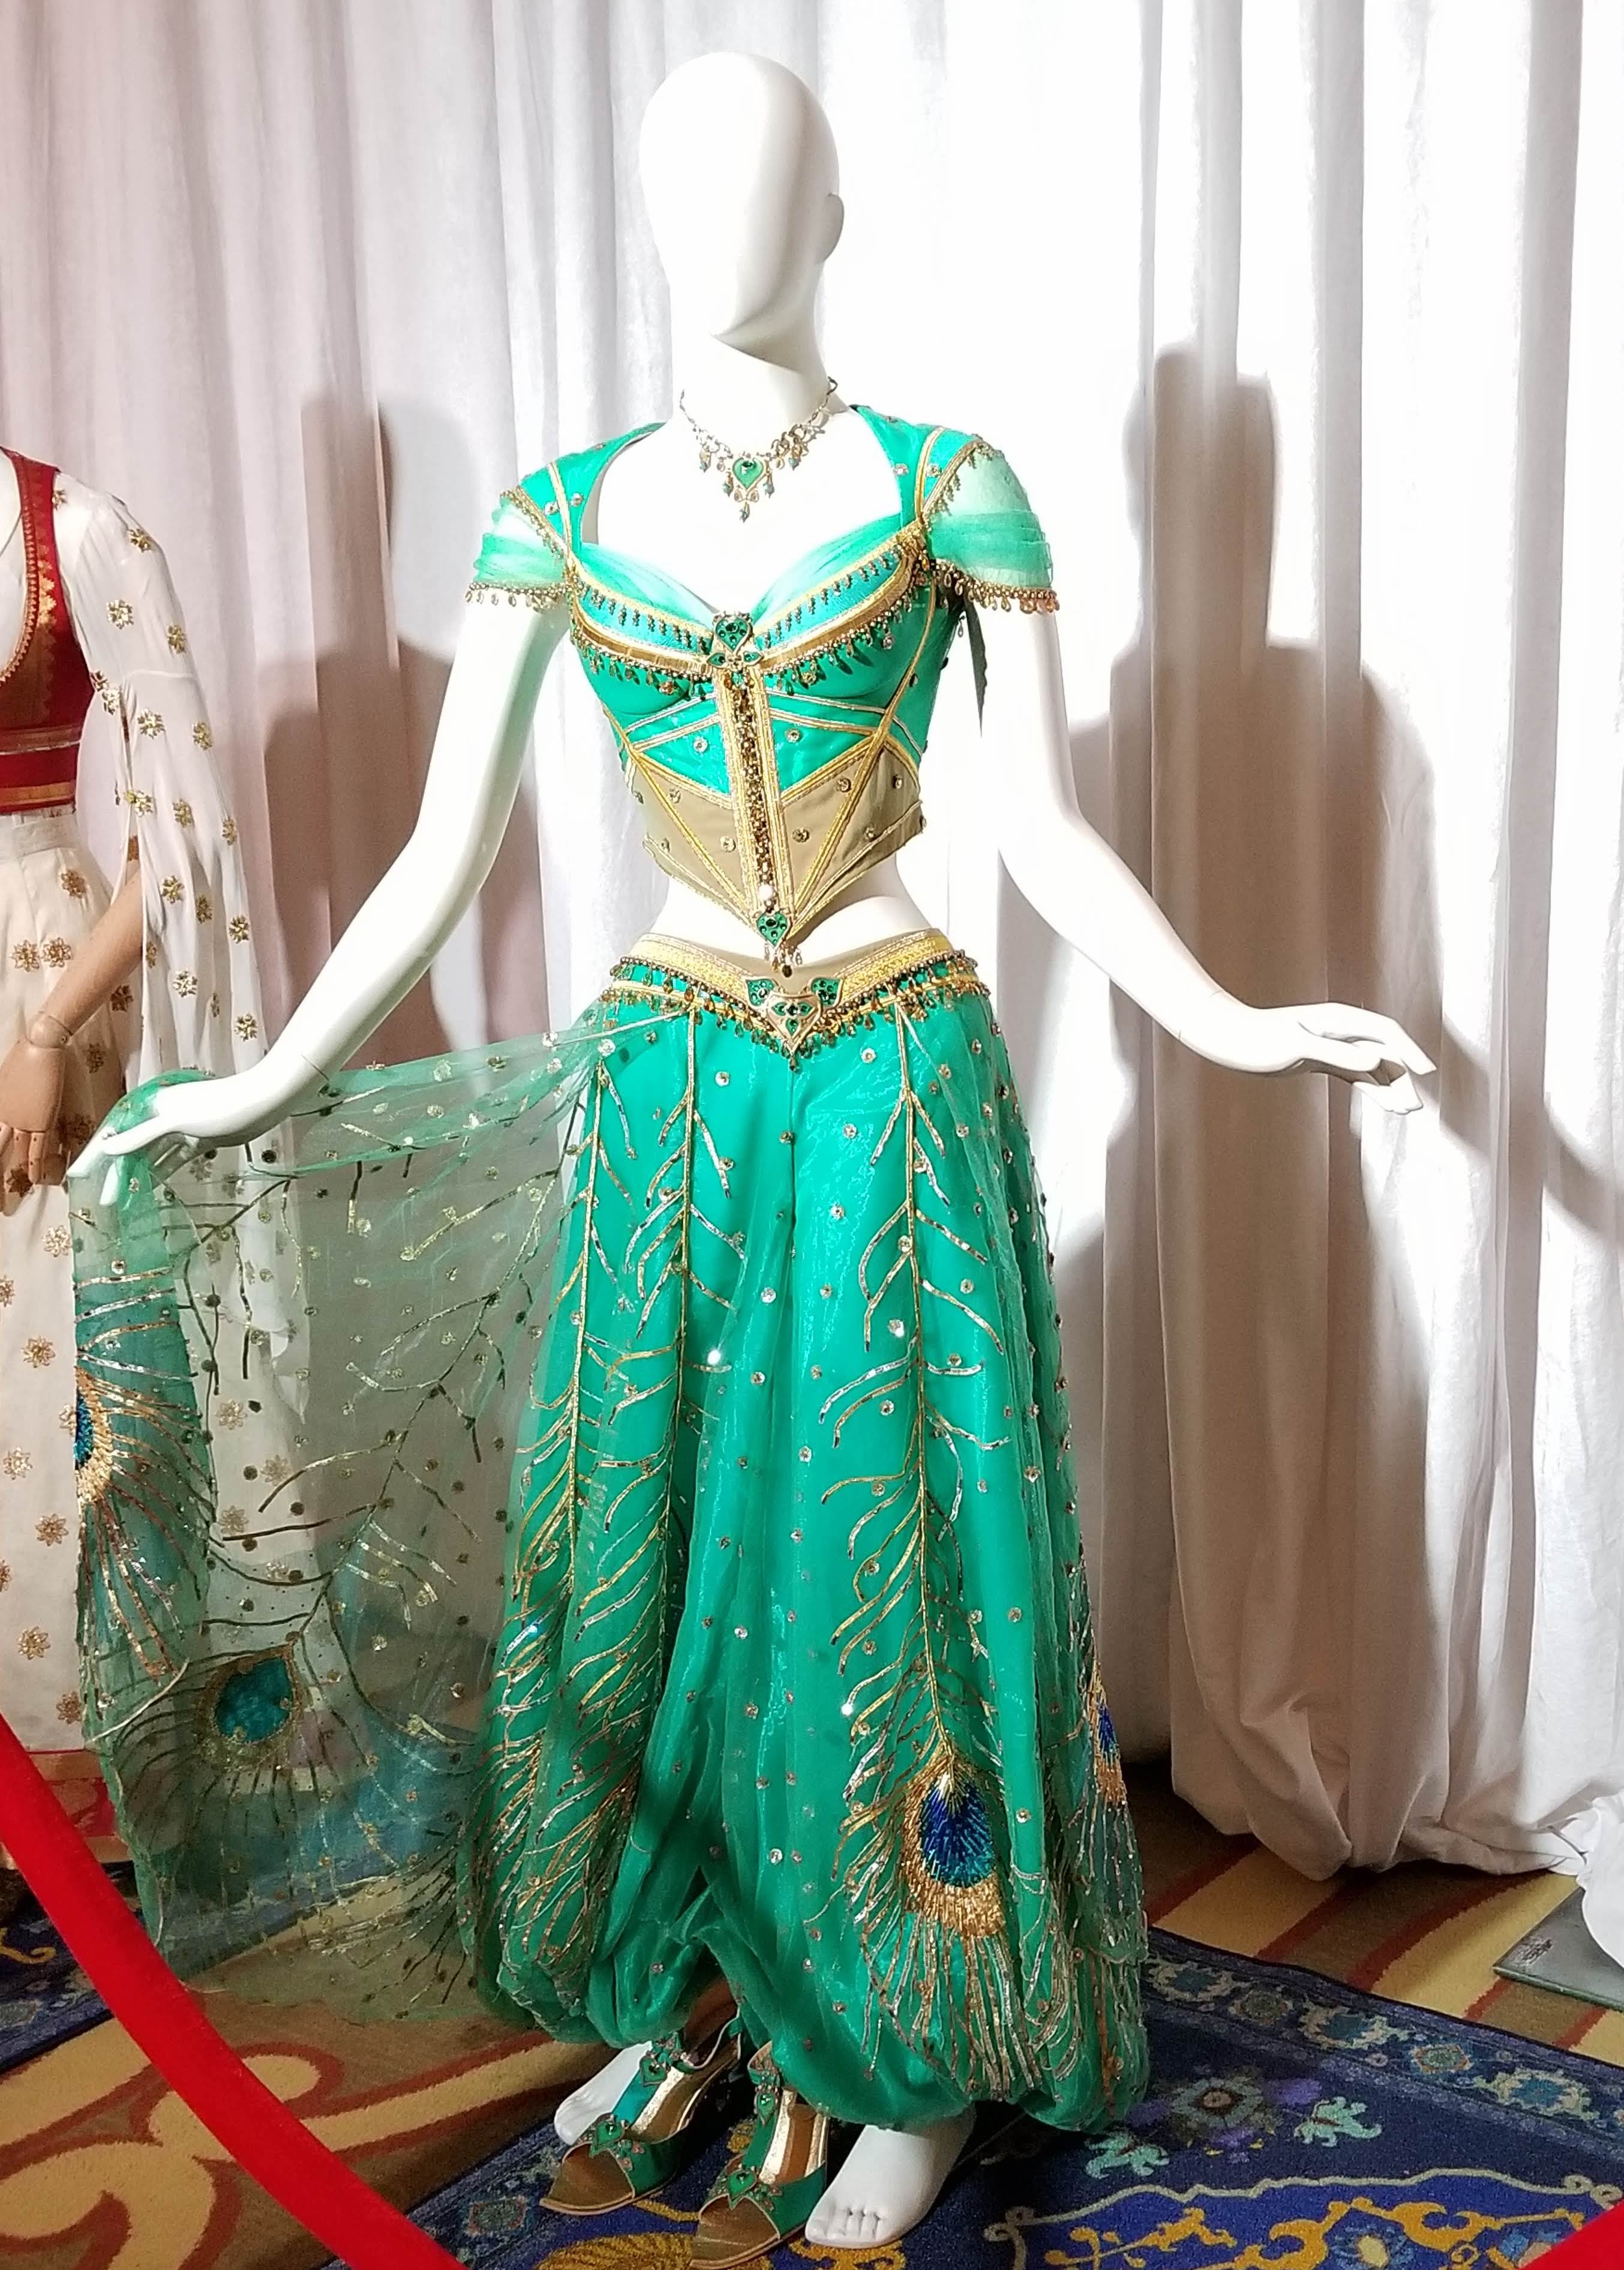 Aladdin 2019 Jasmine Costume | vlr.eng.br